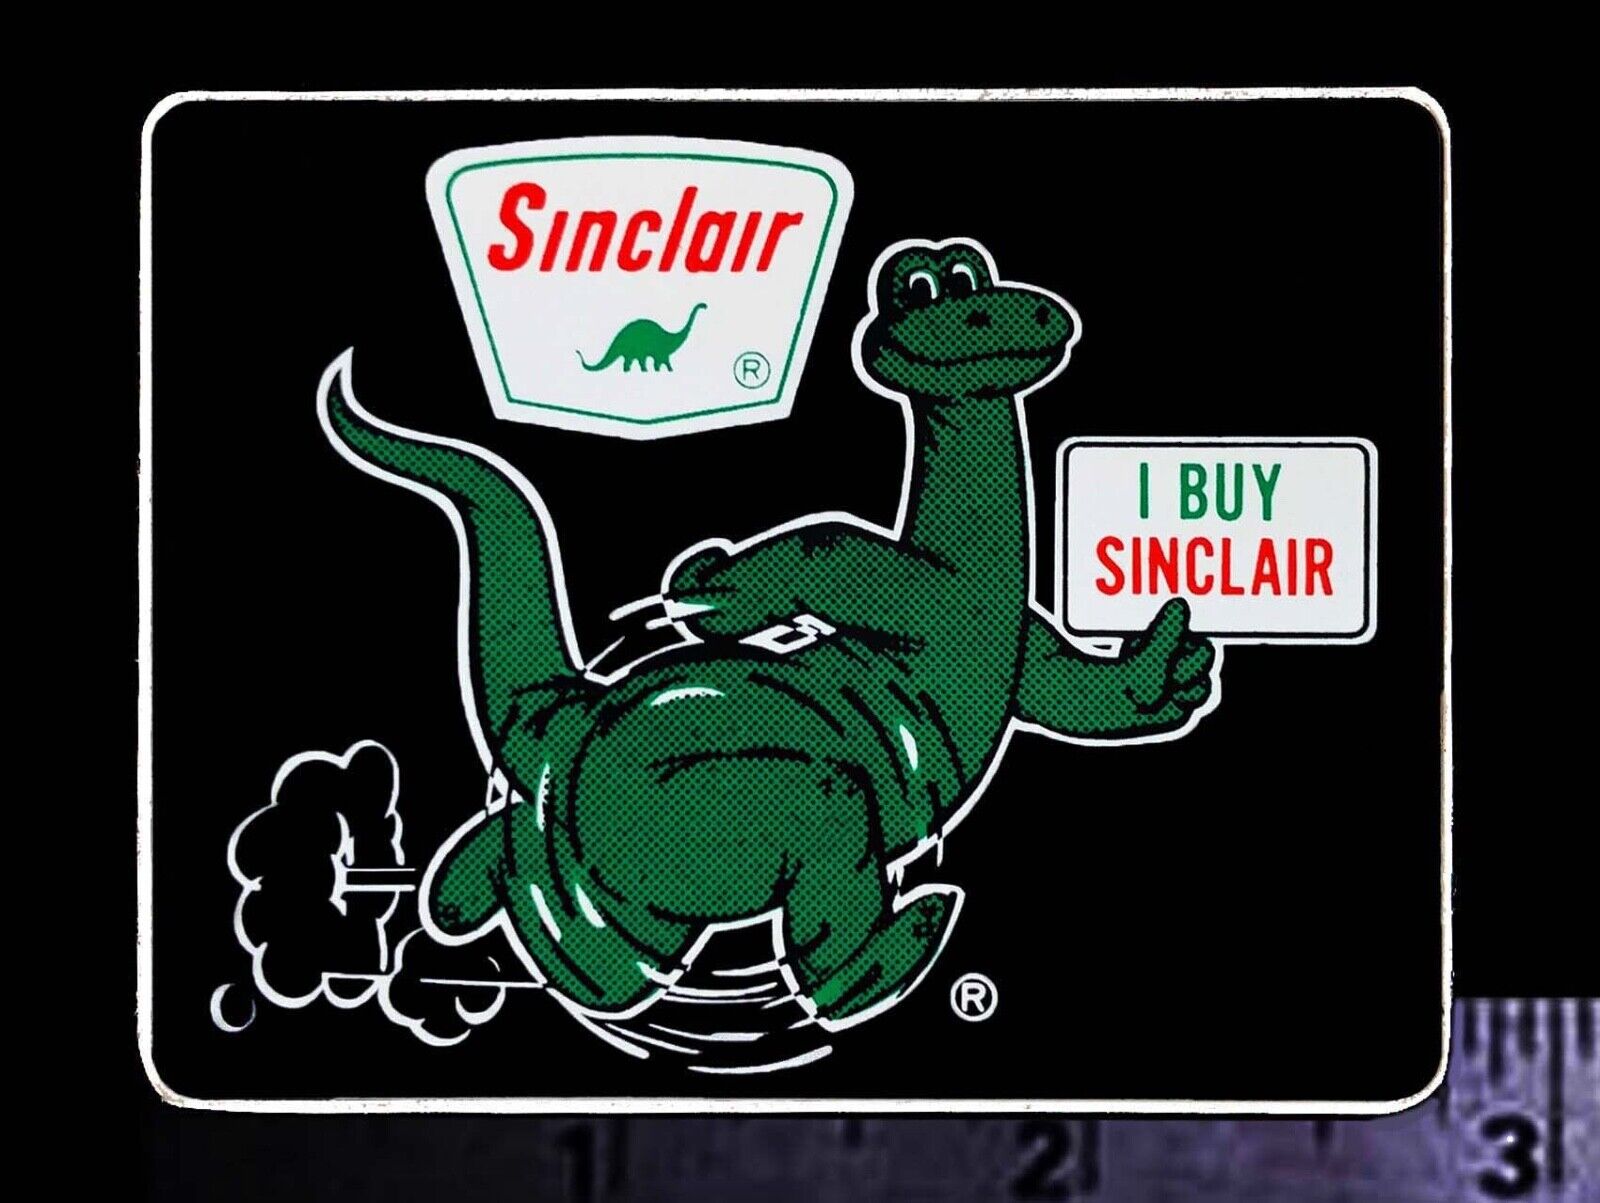 SINCLAIR - I Buy Sinclair - Original Vintage 1970's Racing Decal/Sticker